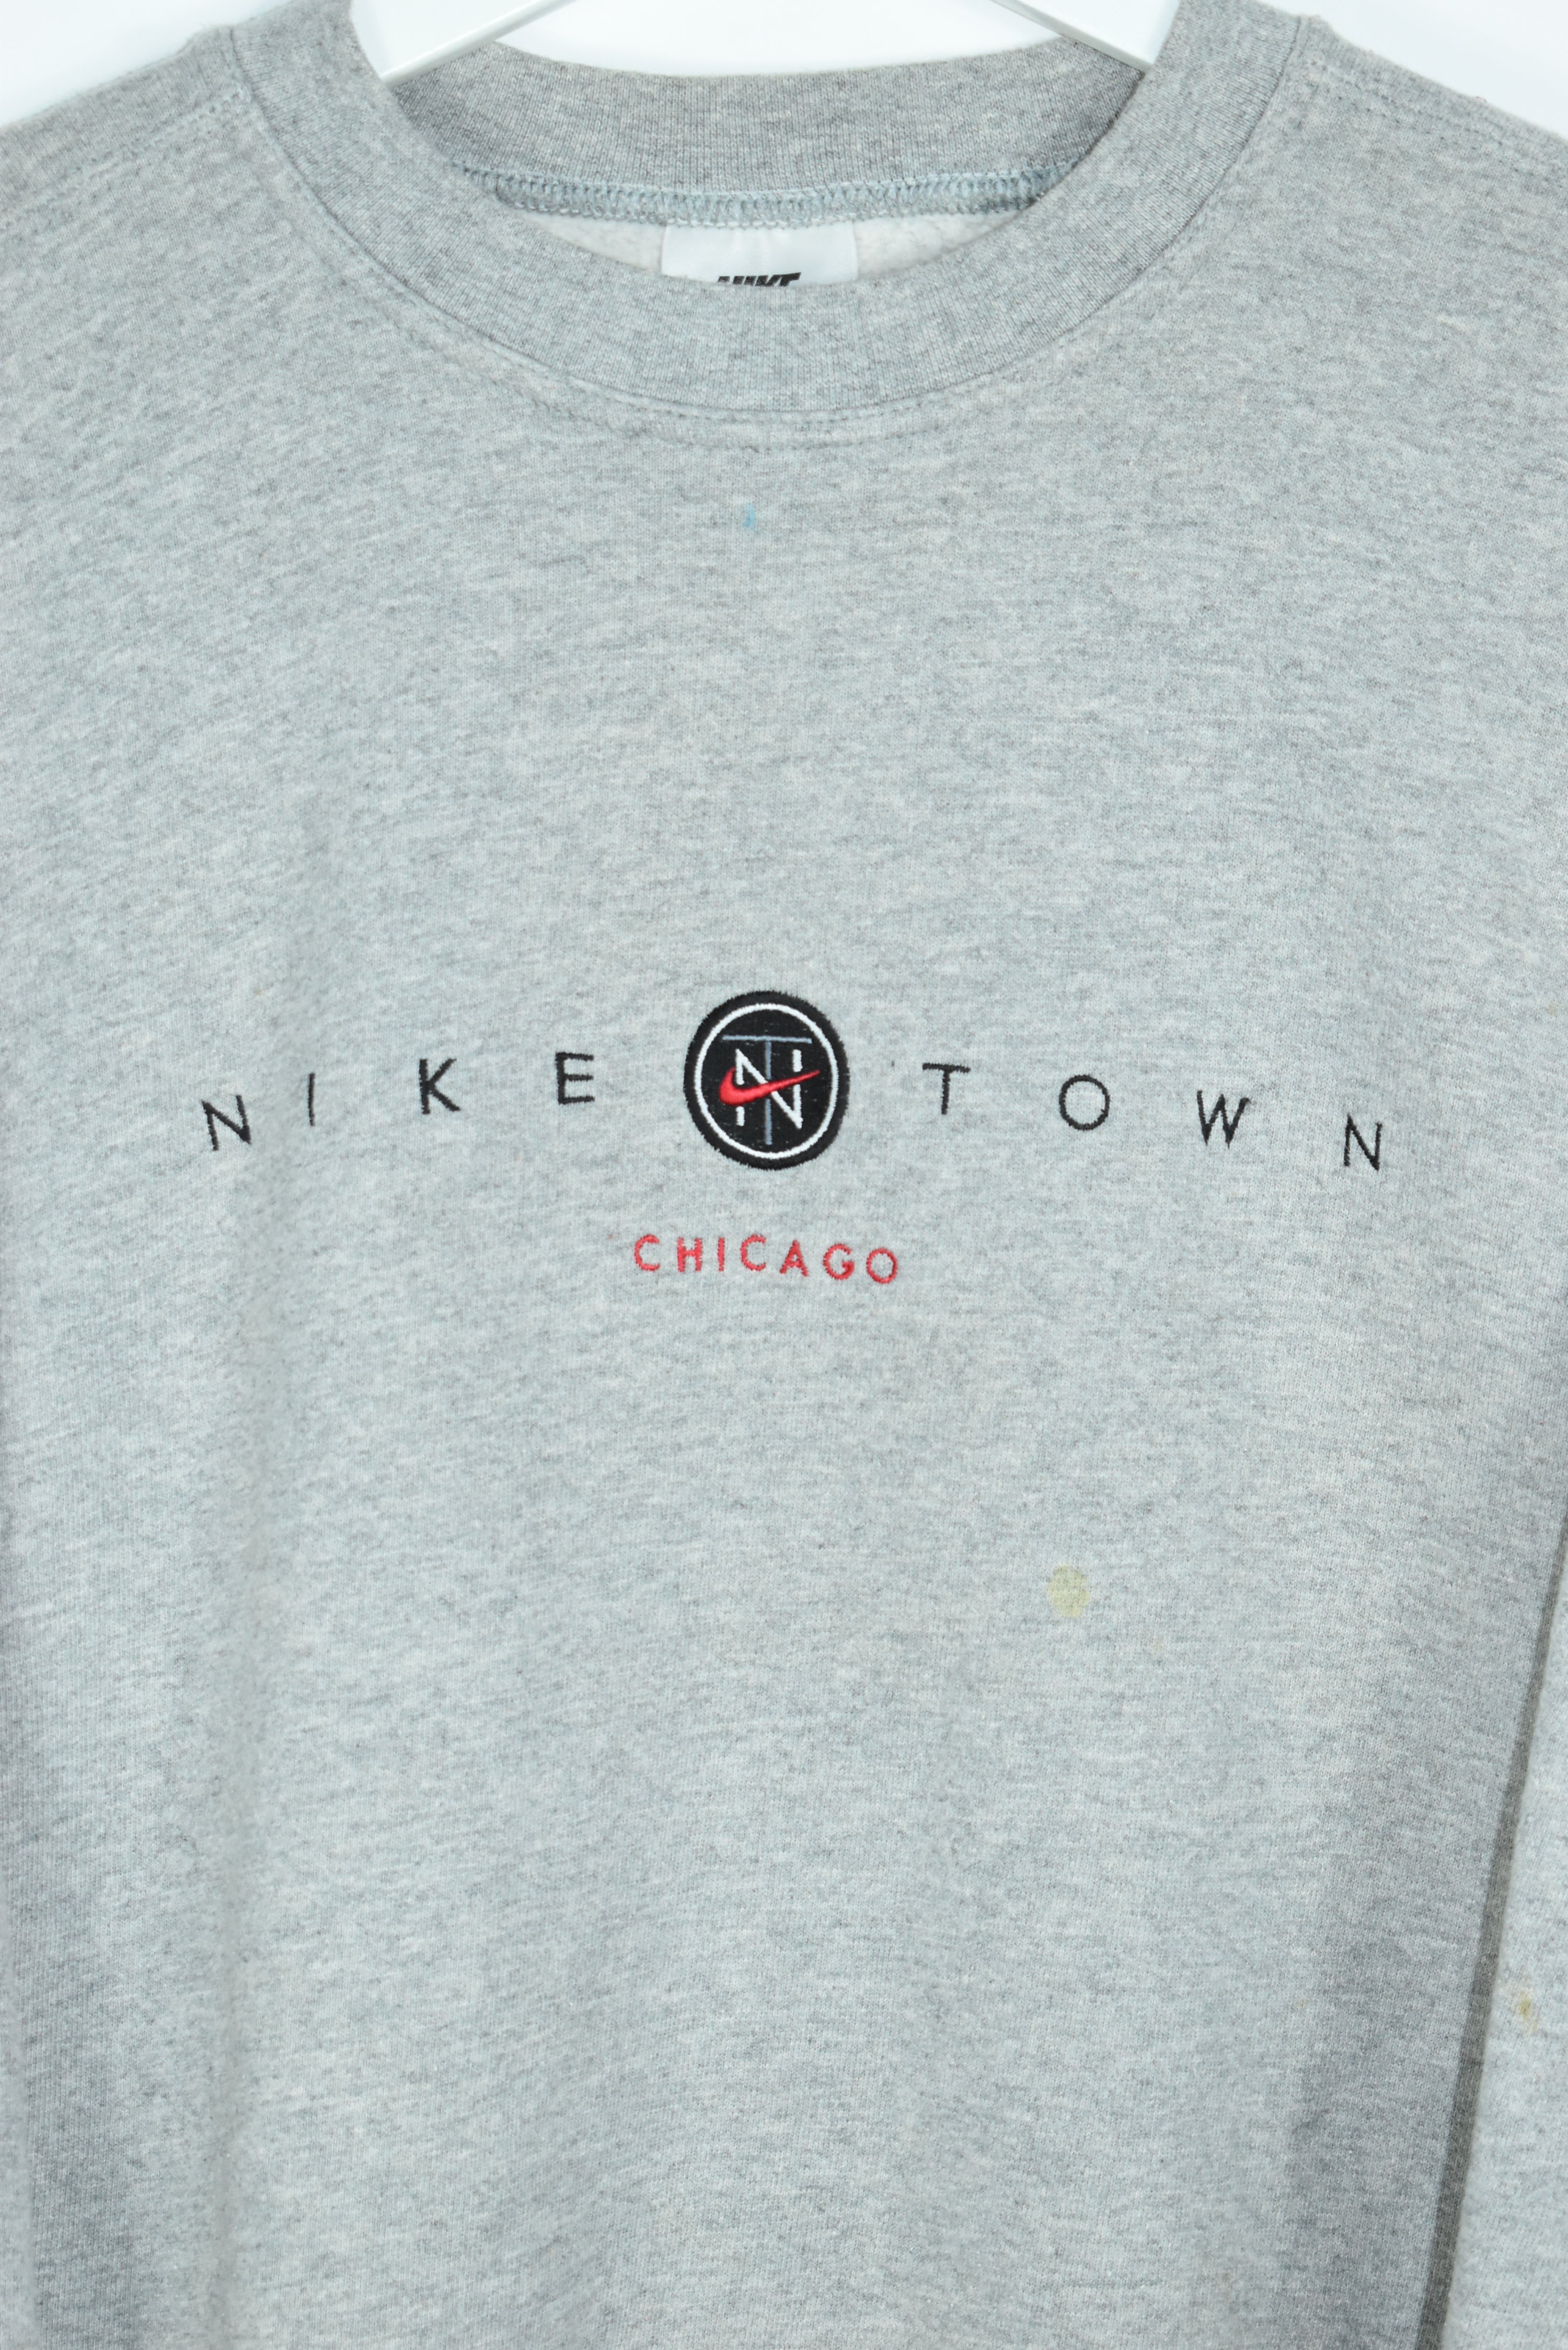 Vintage RARE Nike Town Chicago Sweatshirt MEDIUM (Womens)